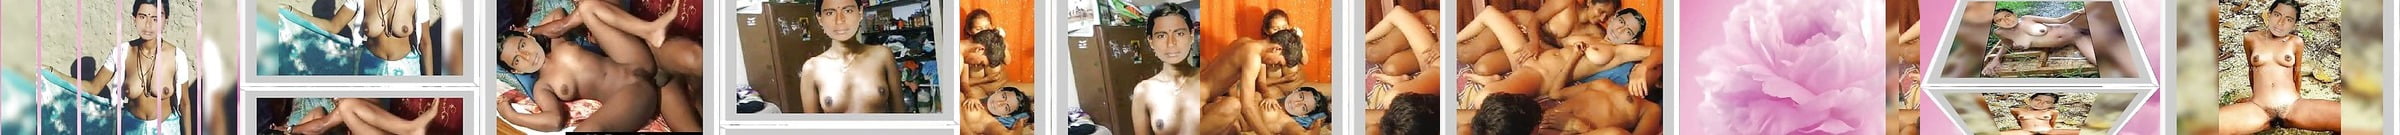 Sexy Indian Women Porn Videos Xhamster